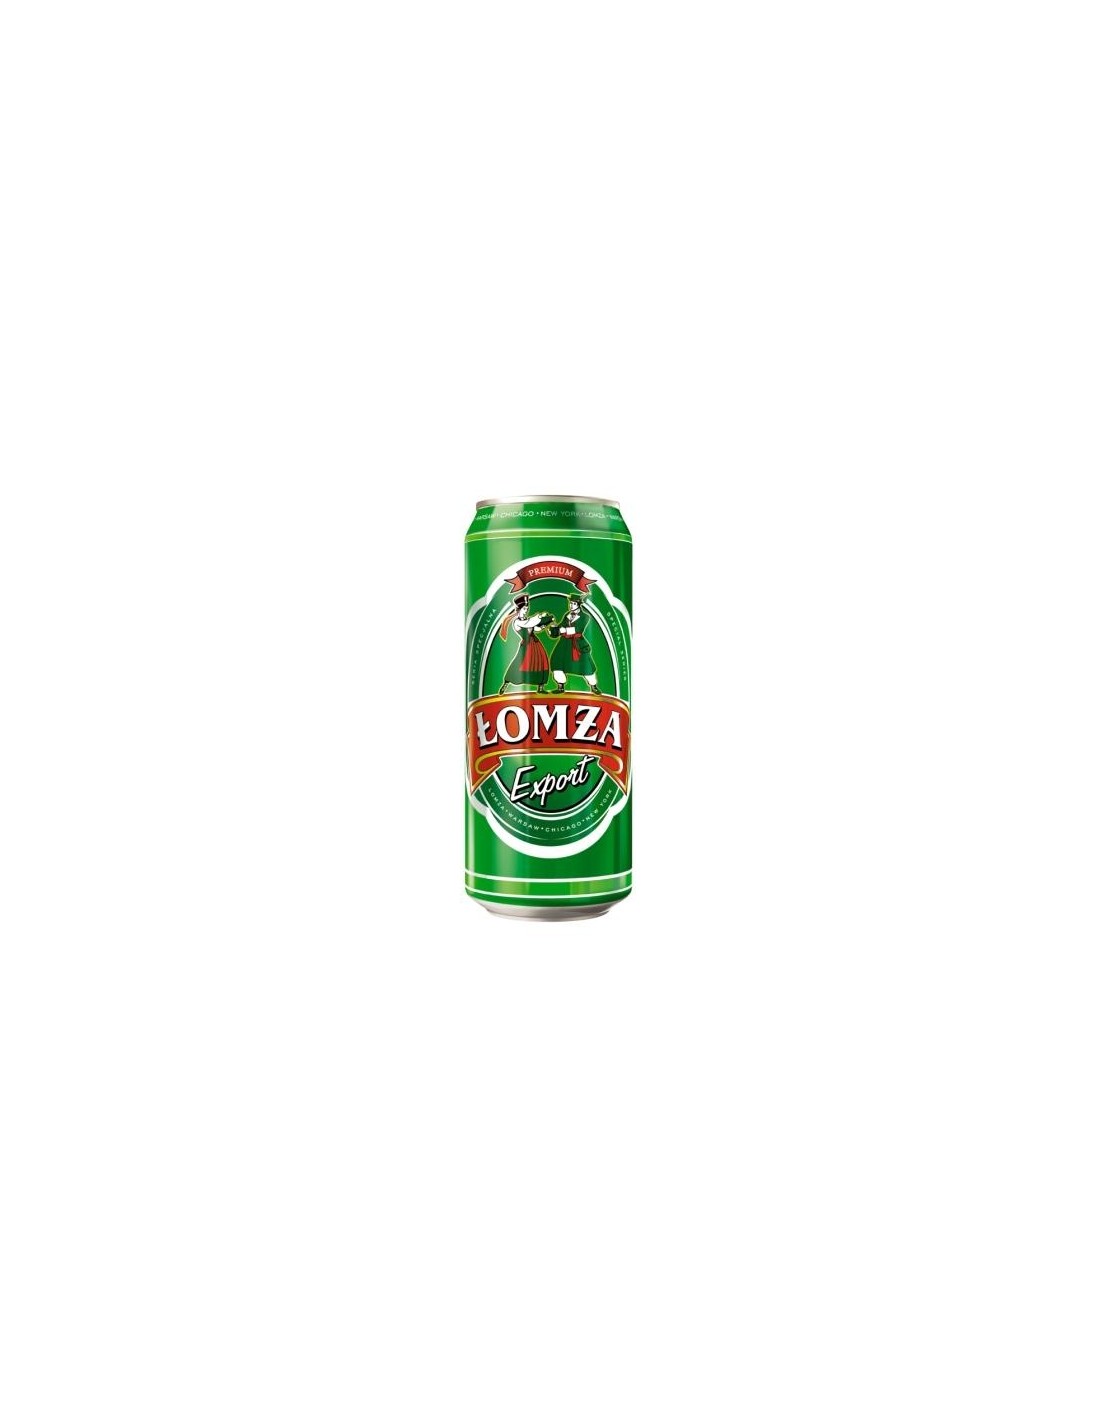 Bere blonda, filtrata Lomza Export, 5.7% alc., 0.5L, doza, Polonia alcooldiscount.ro